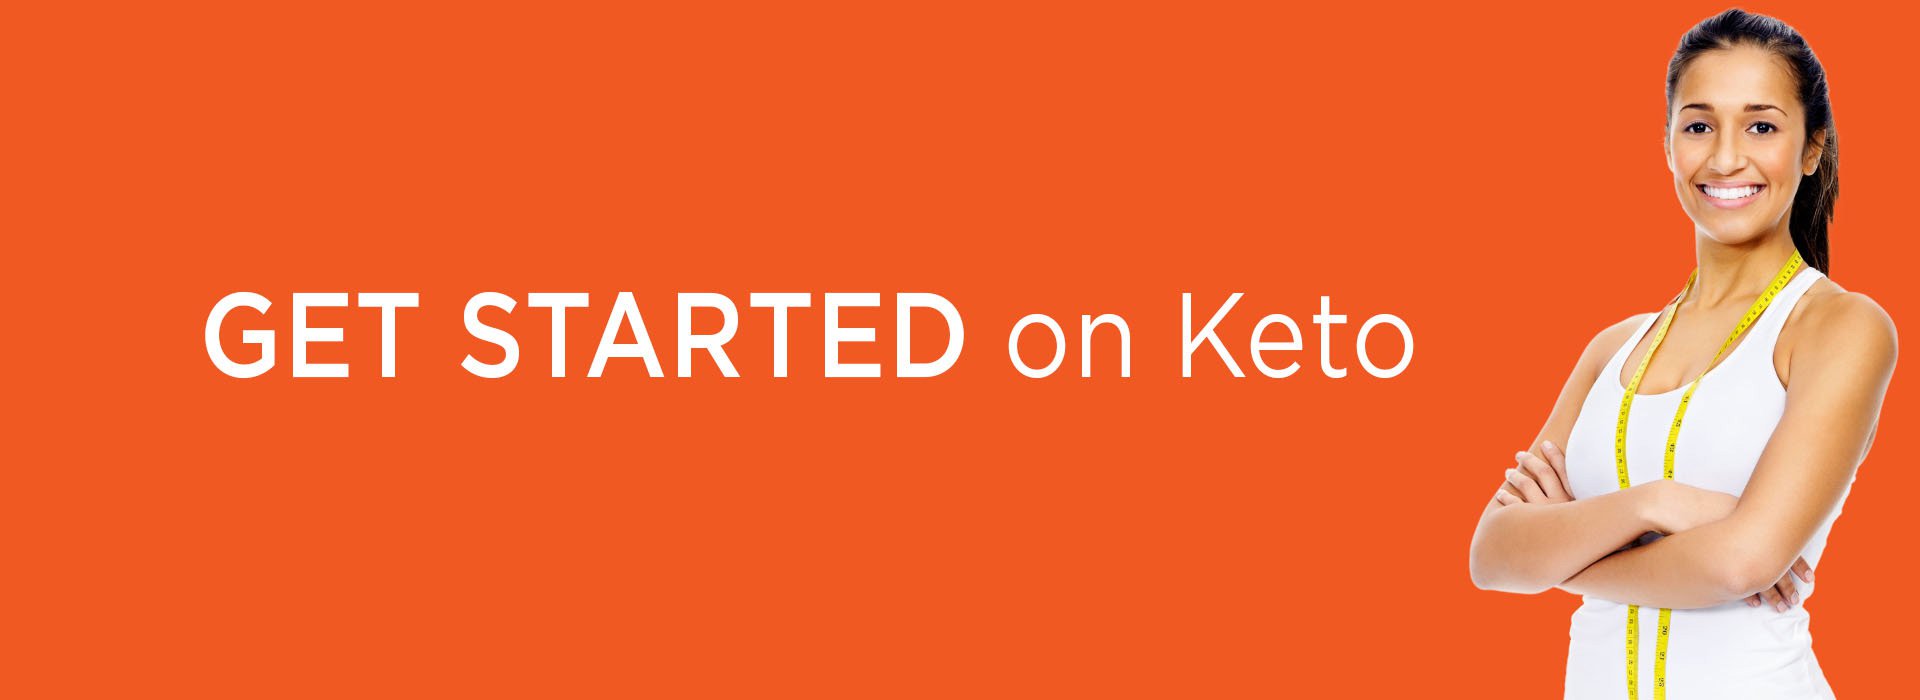 New Image International:Get Started on Keto